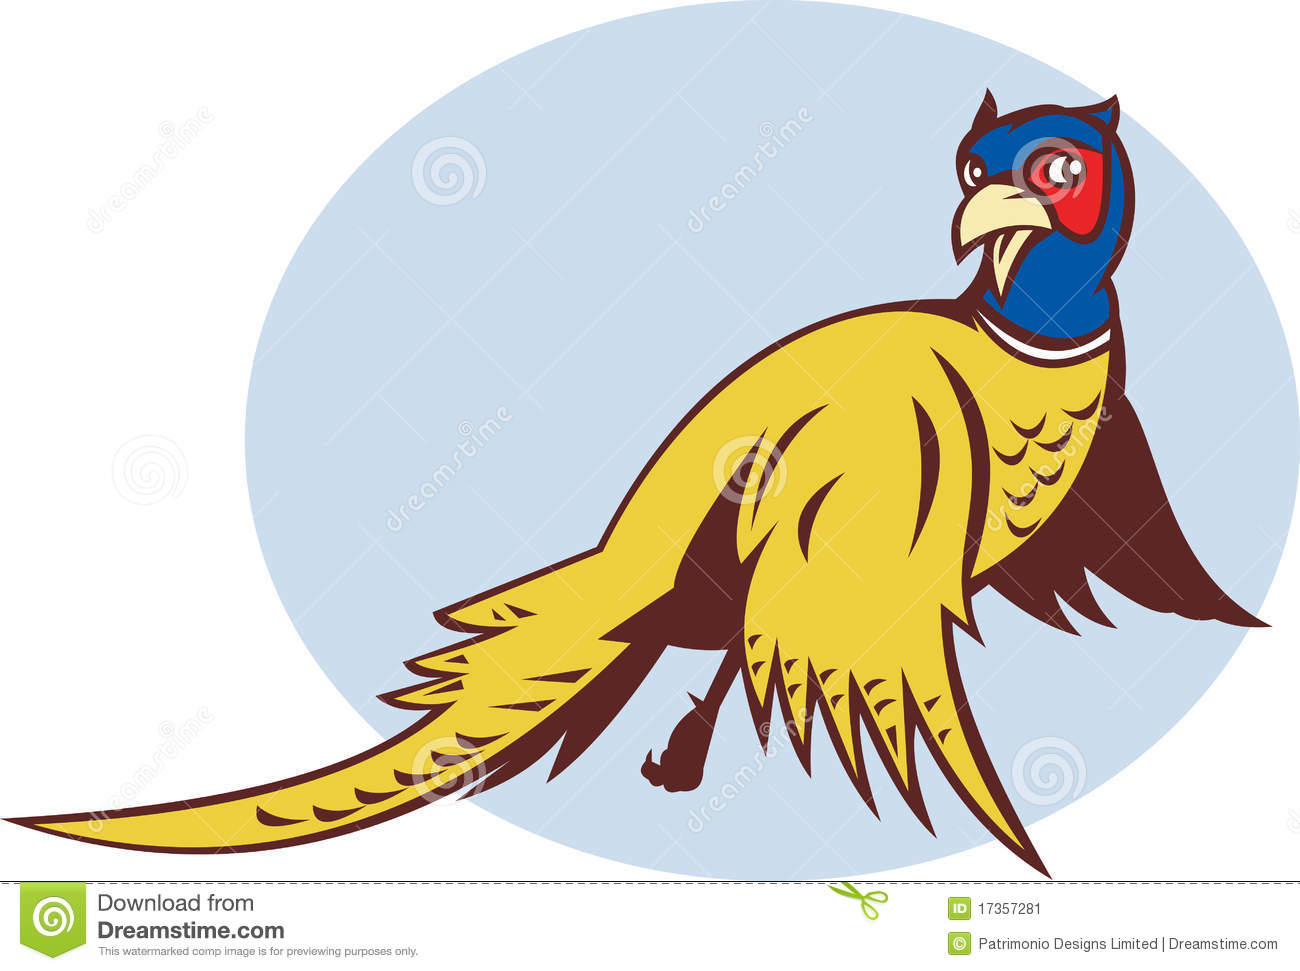 Illustration Of A Cartoon Pheasant Bird Flying Looking Surprised